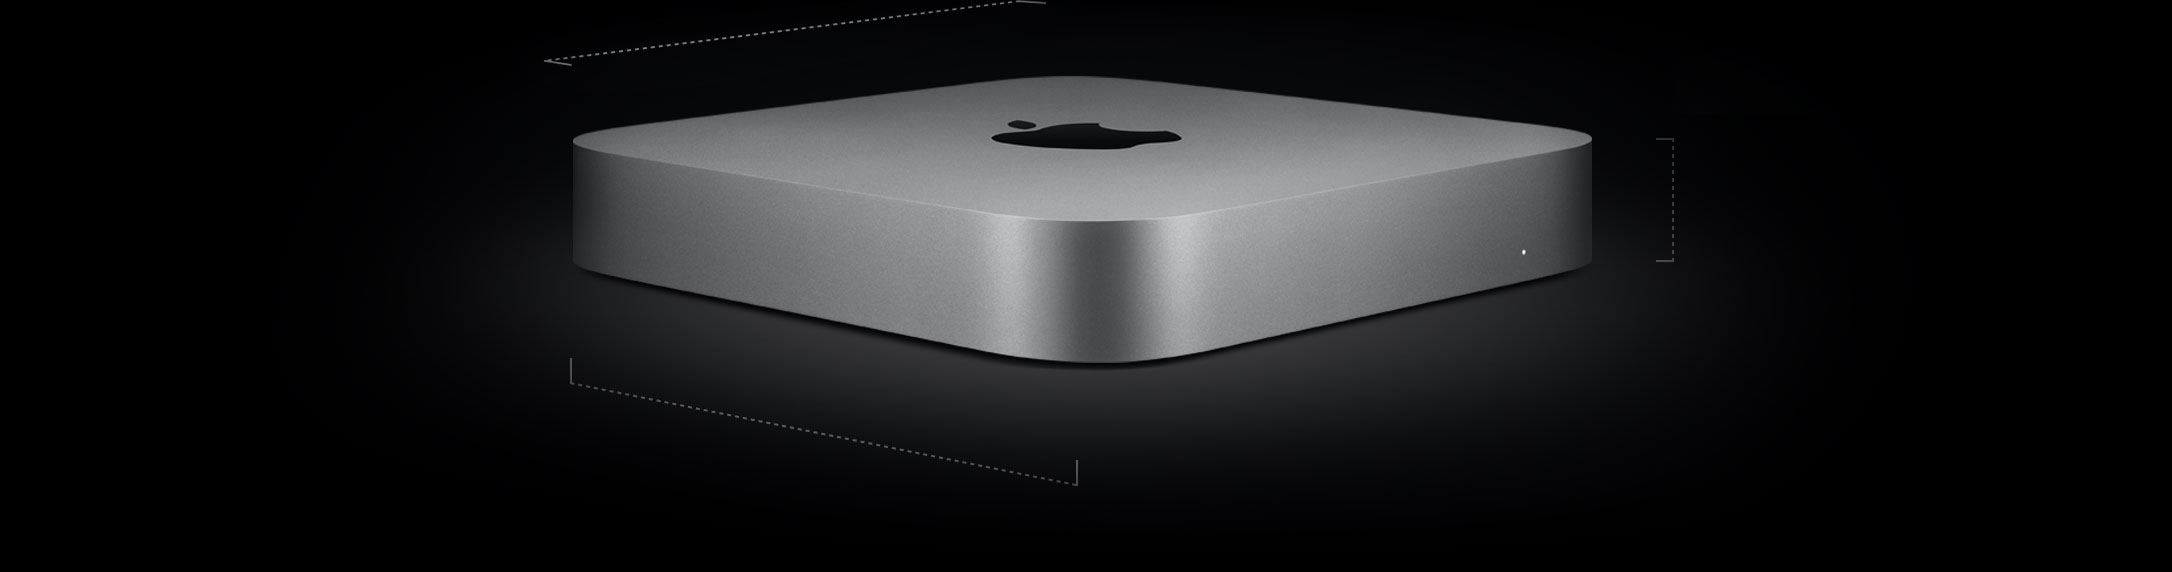 Mac mini - Technical Specifications - Apple